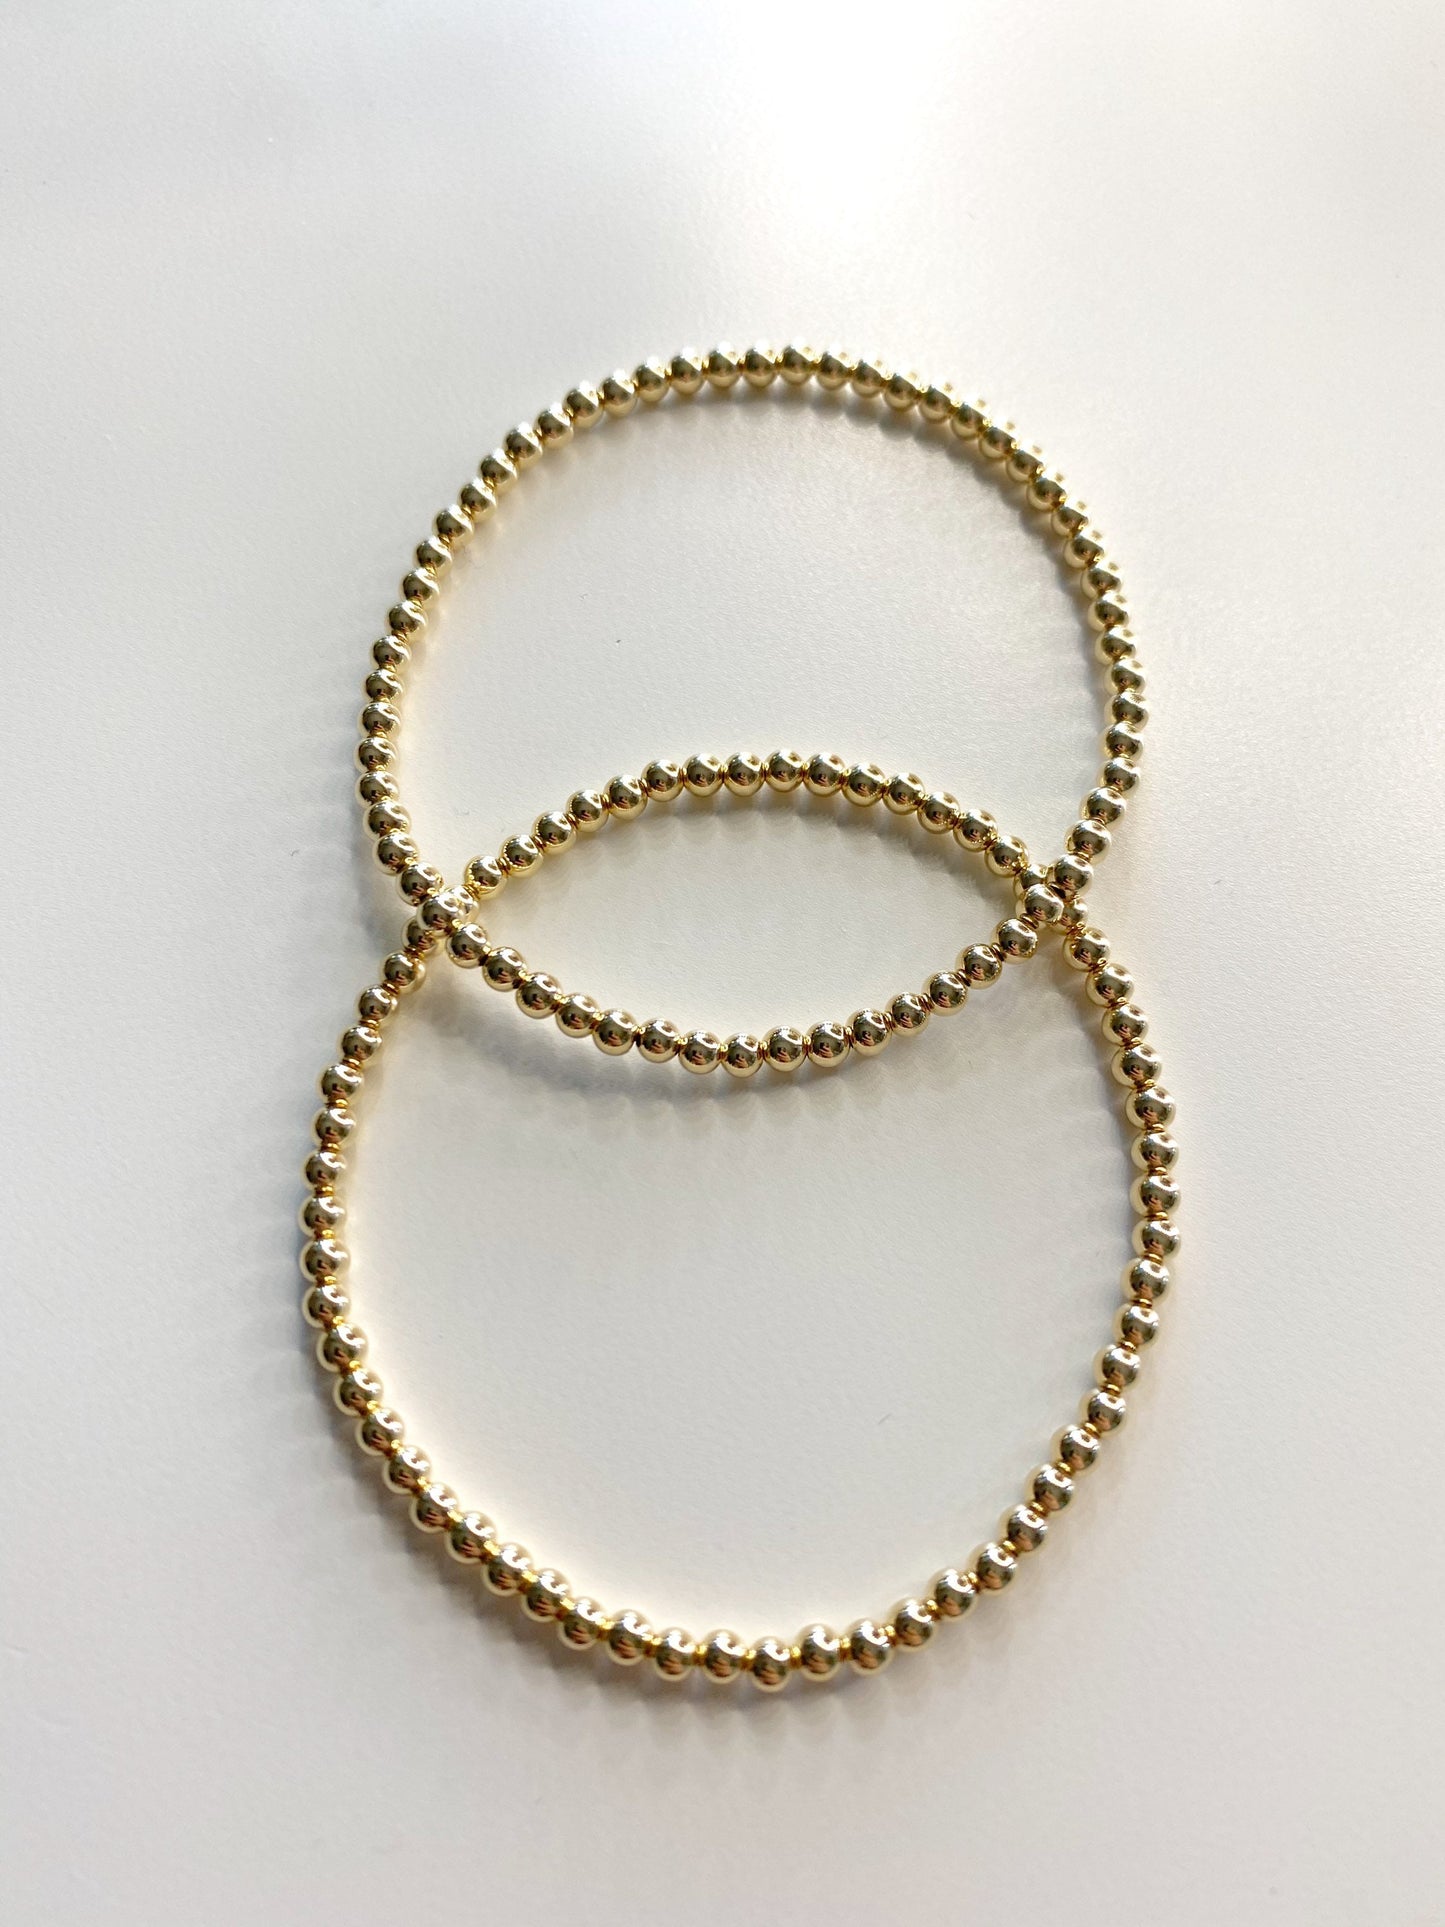 The Classic Golden Bracelet